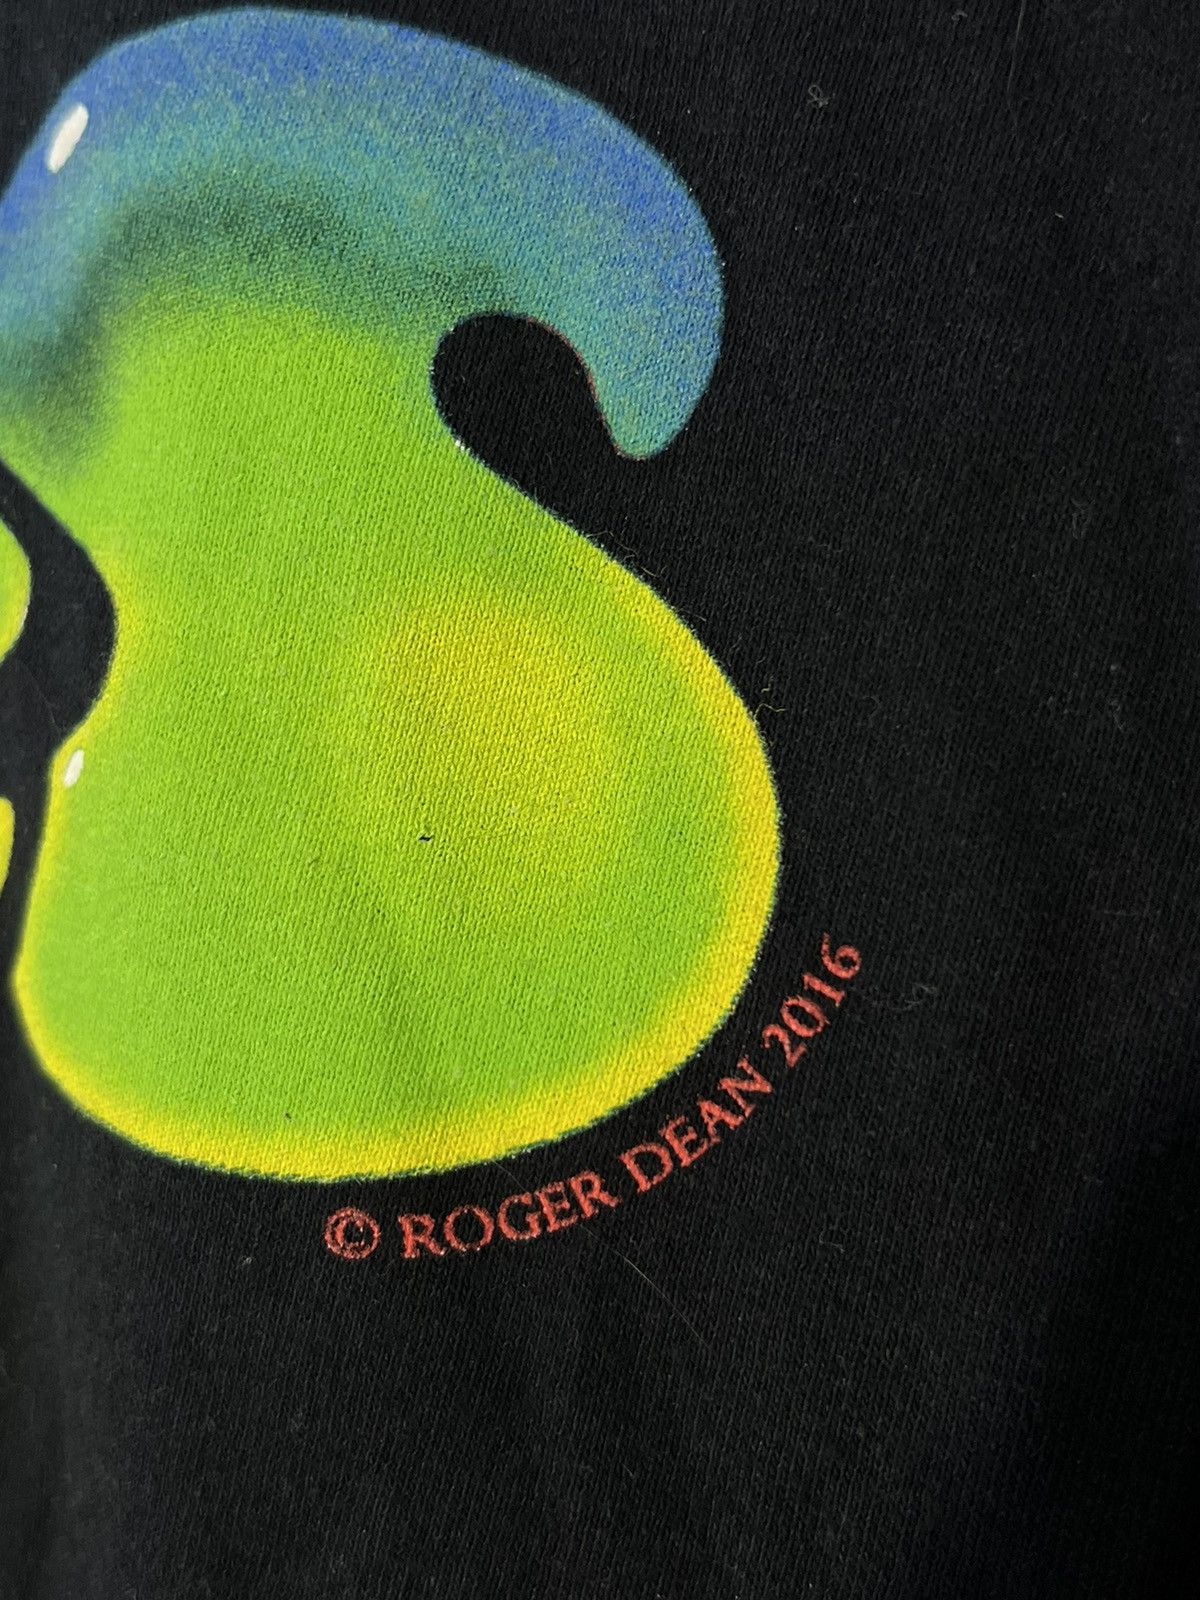 Vintage Roger dean tour 2016 t-shirt retro tee 90s black Size US M / EU 48-50 / 2 - 8 Thumbnail